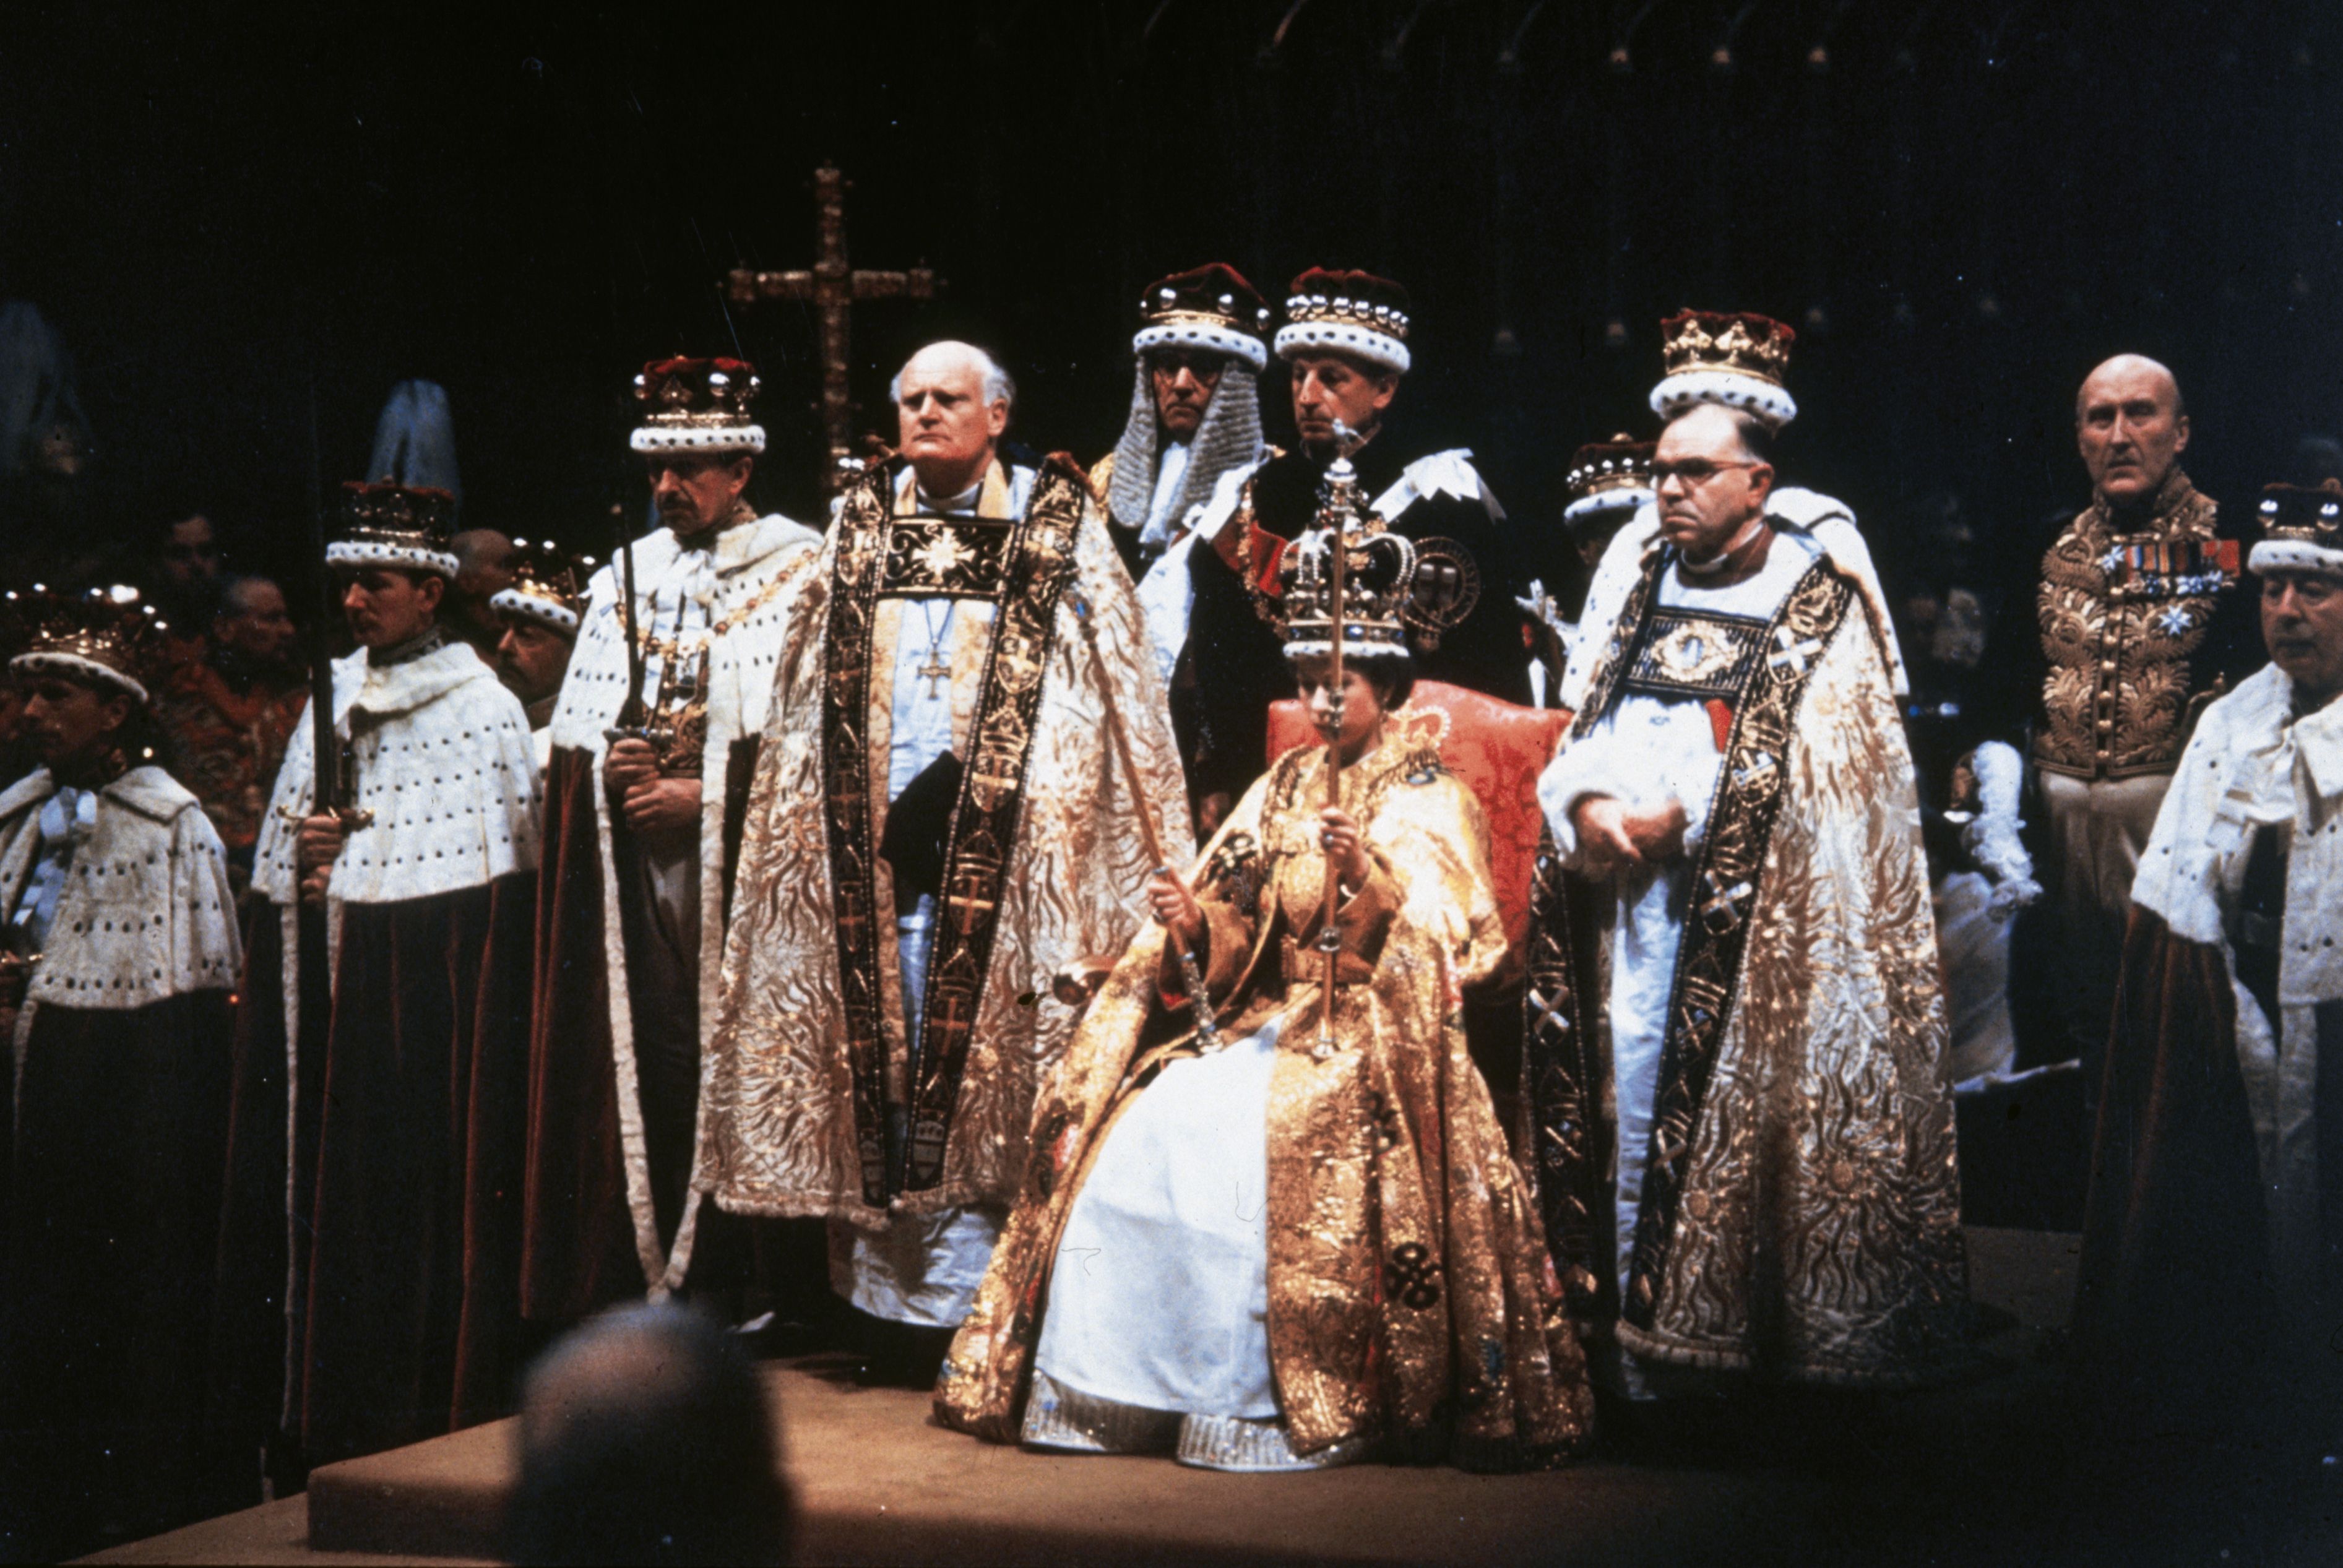 Queen Elizabeth II after her coronation ceremony in Westminster Abbey, London in 1953.